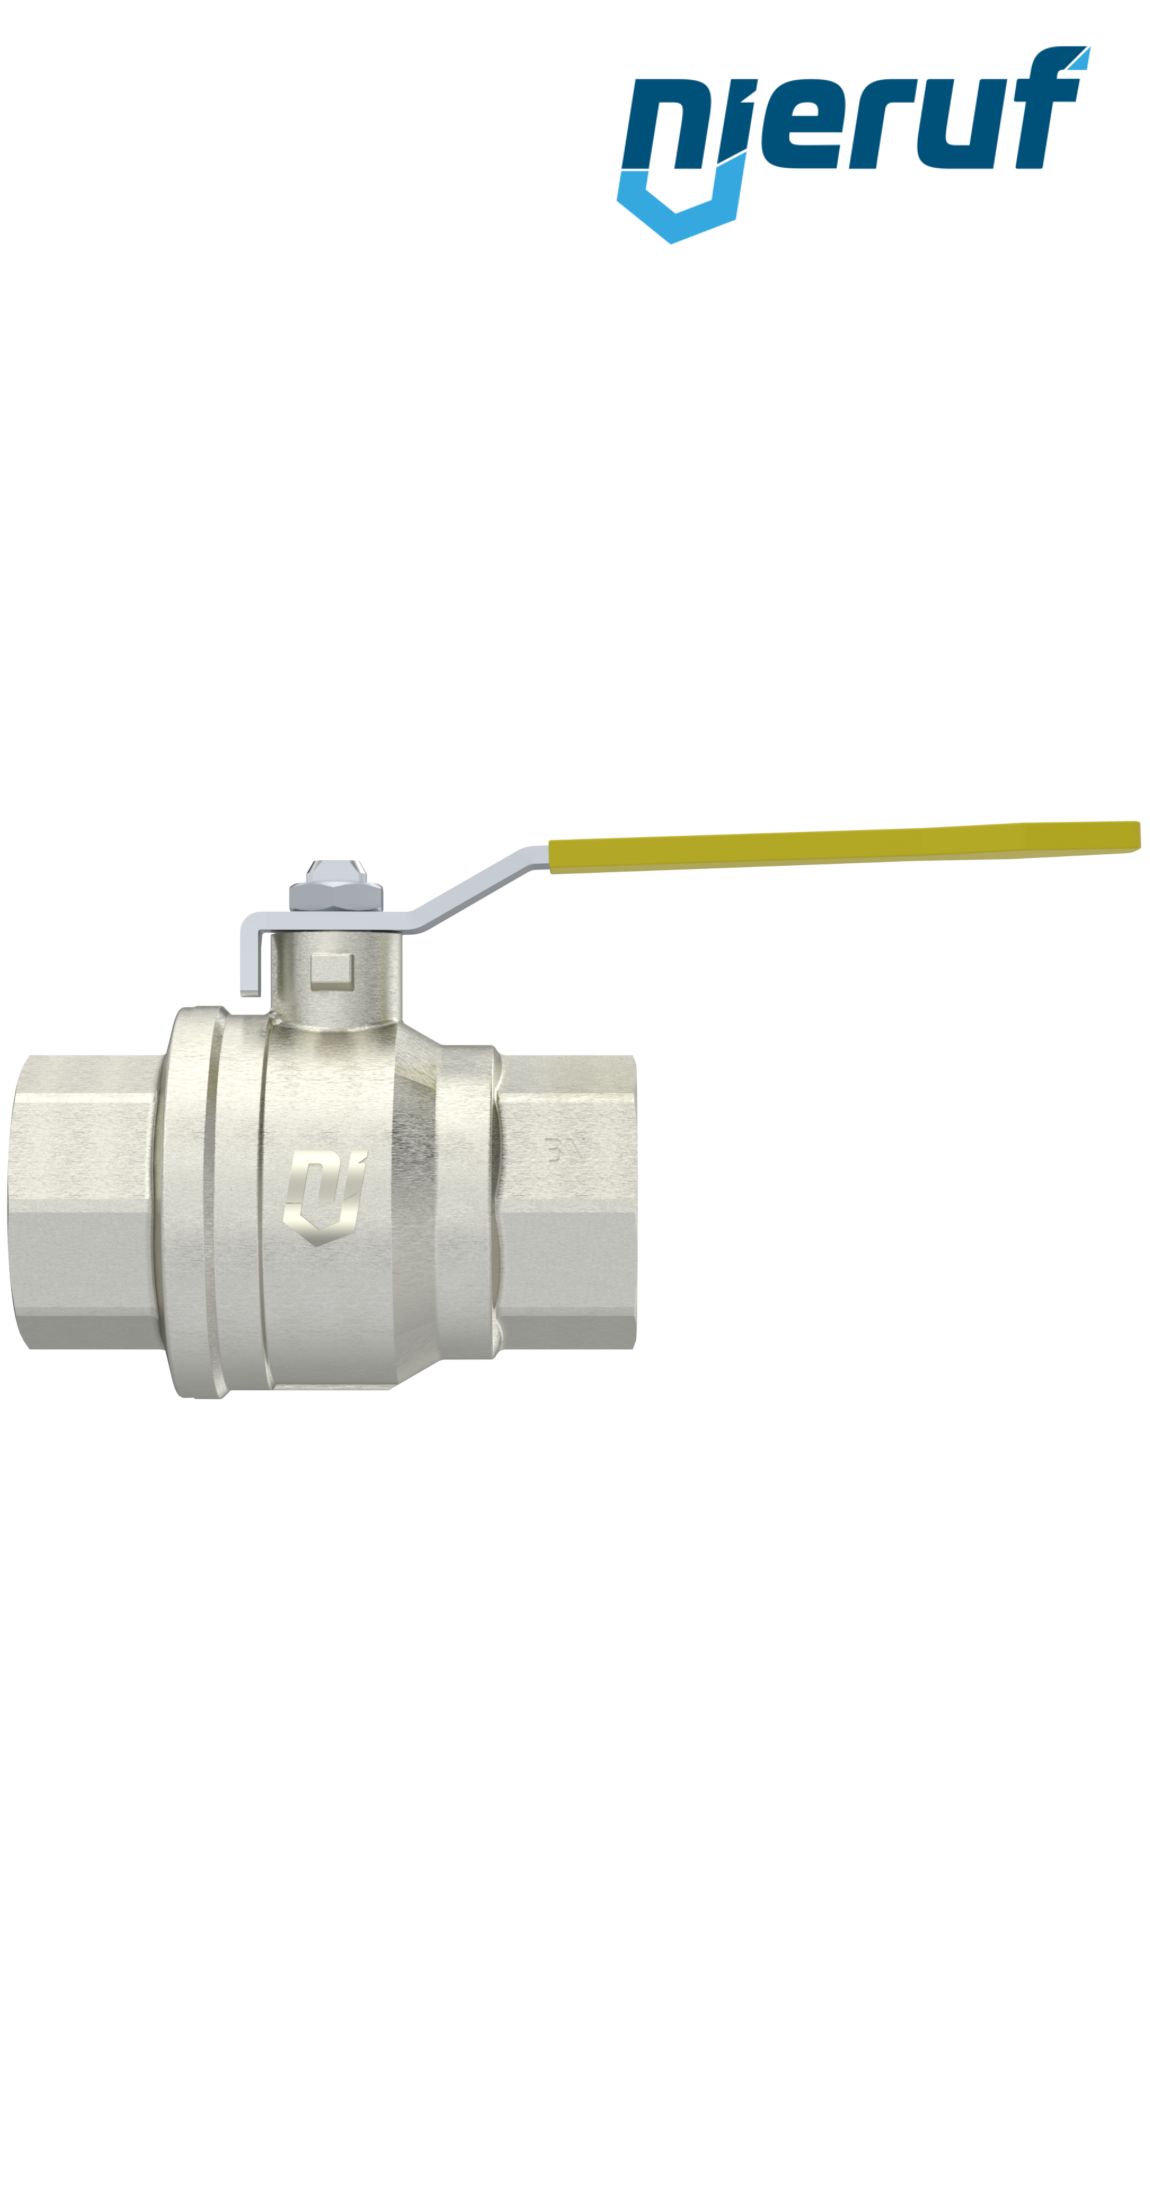 brass ball valve for gas DN25 - 1" inch GK14 female thread